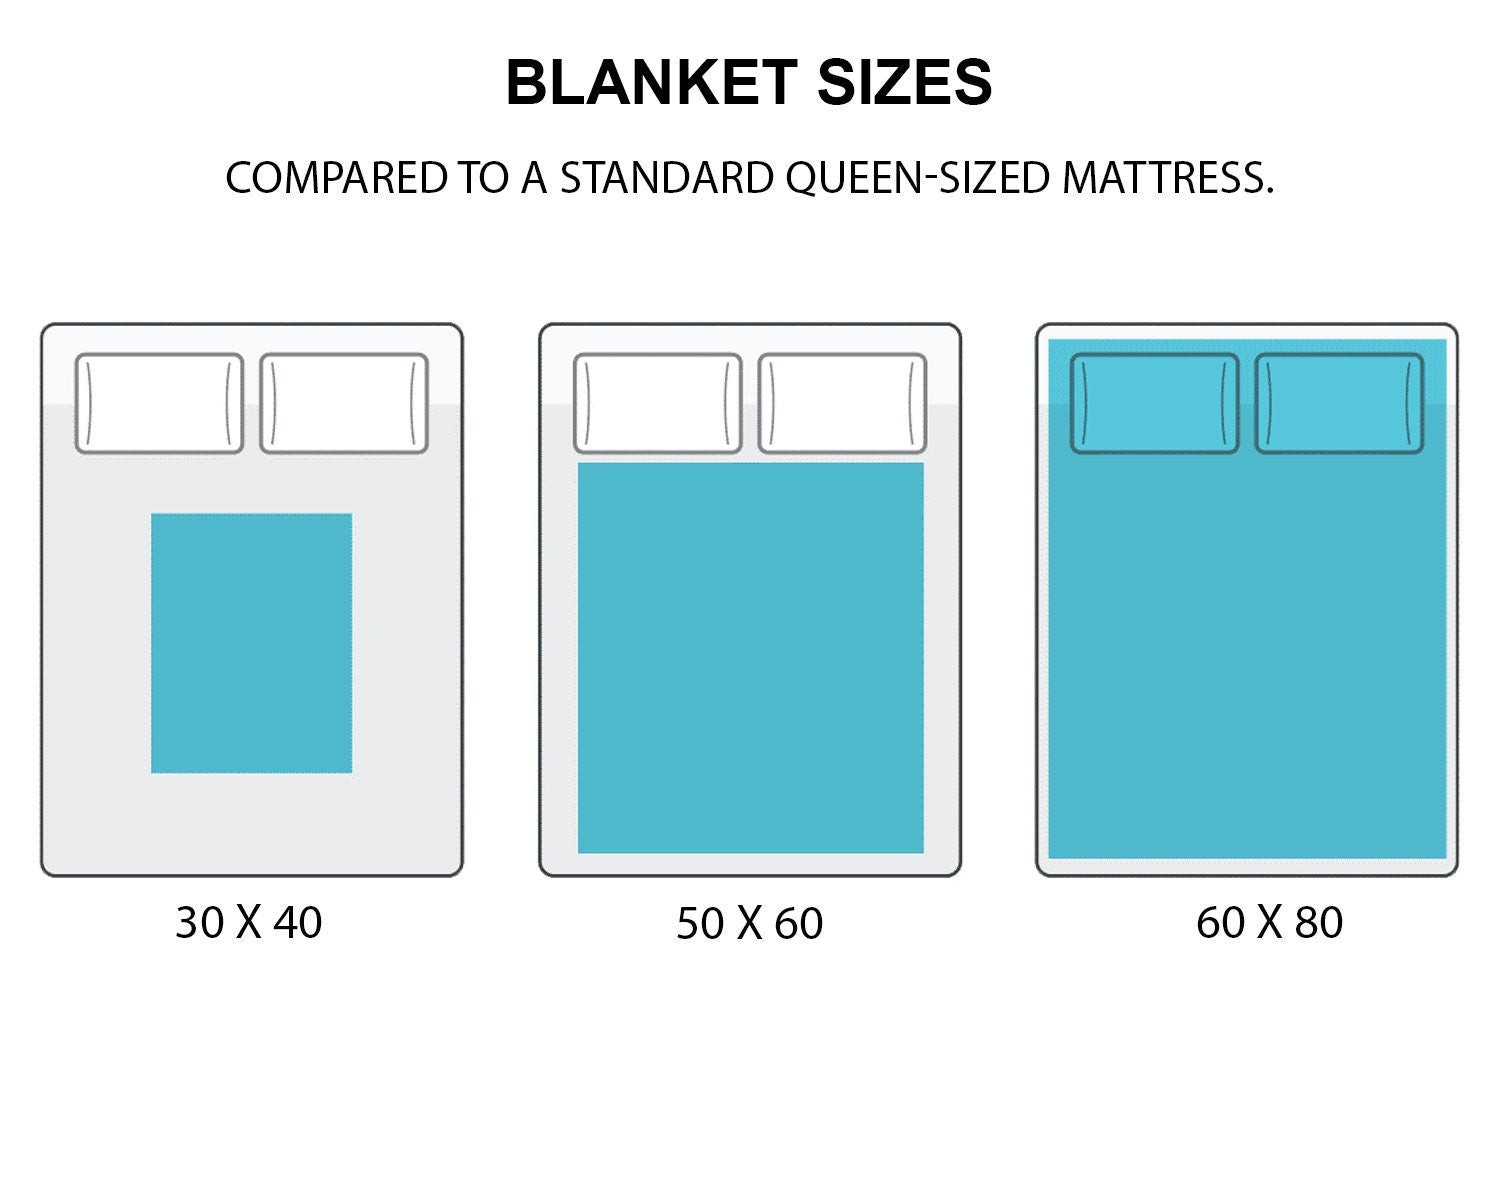 Kevin Durant Splash Effect Fleece Blanket Style 2 